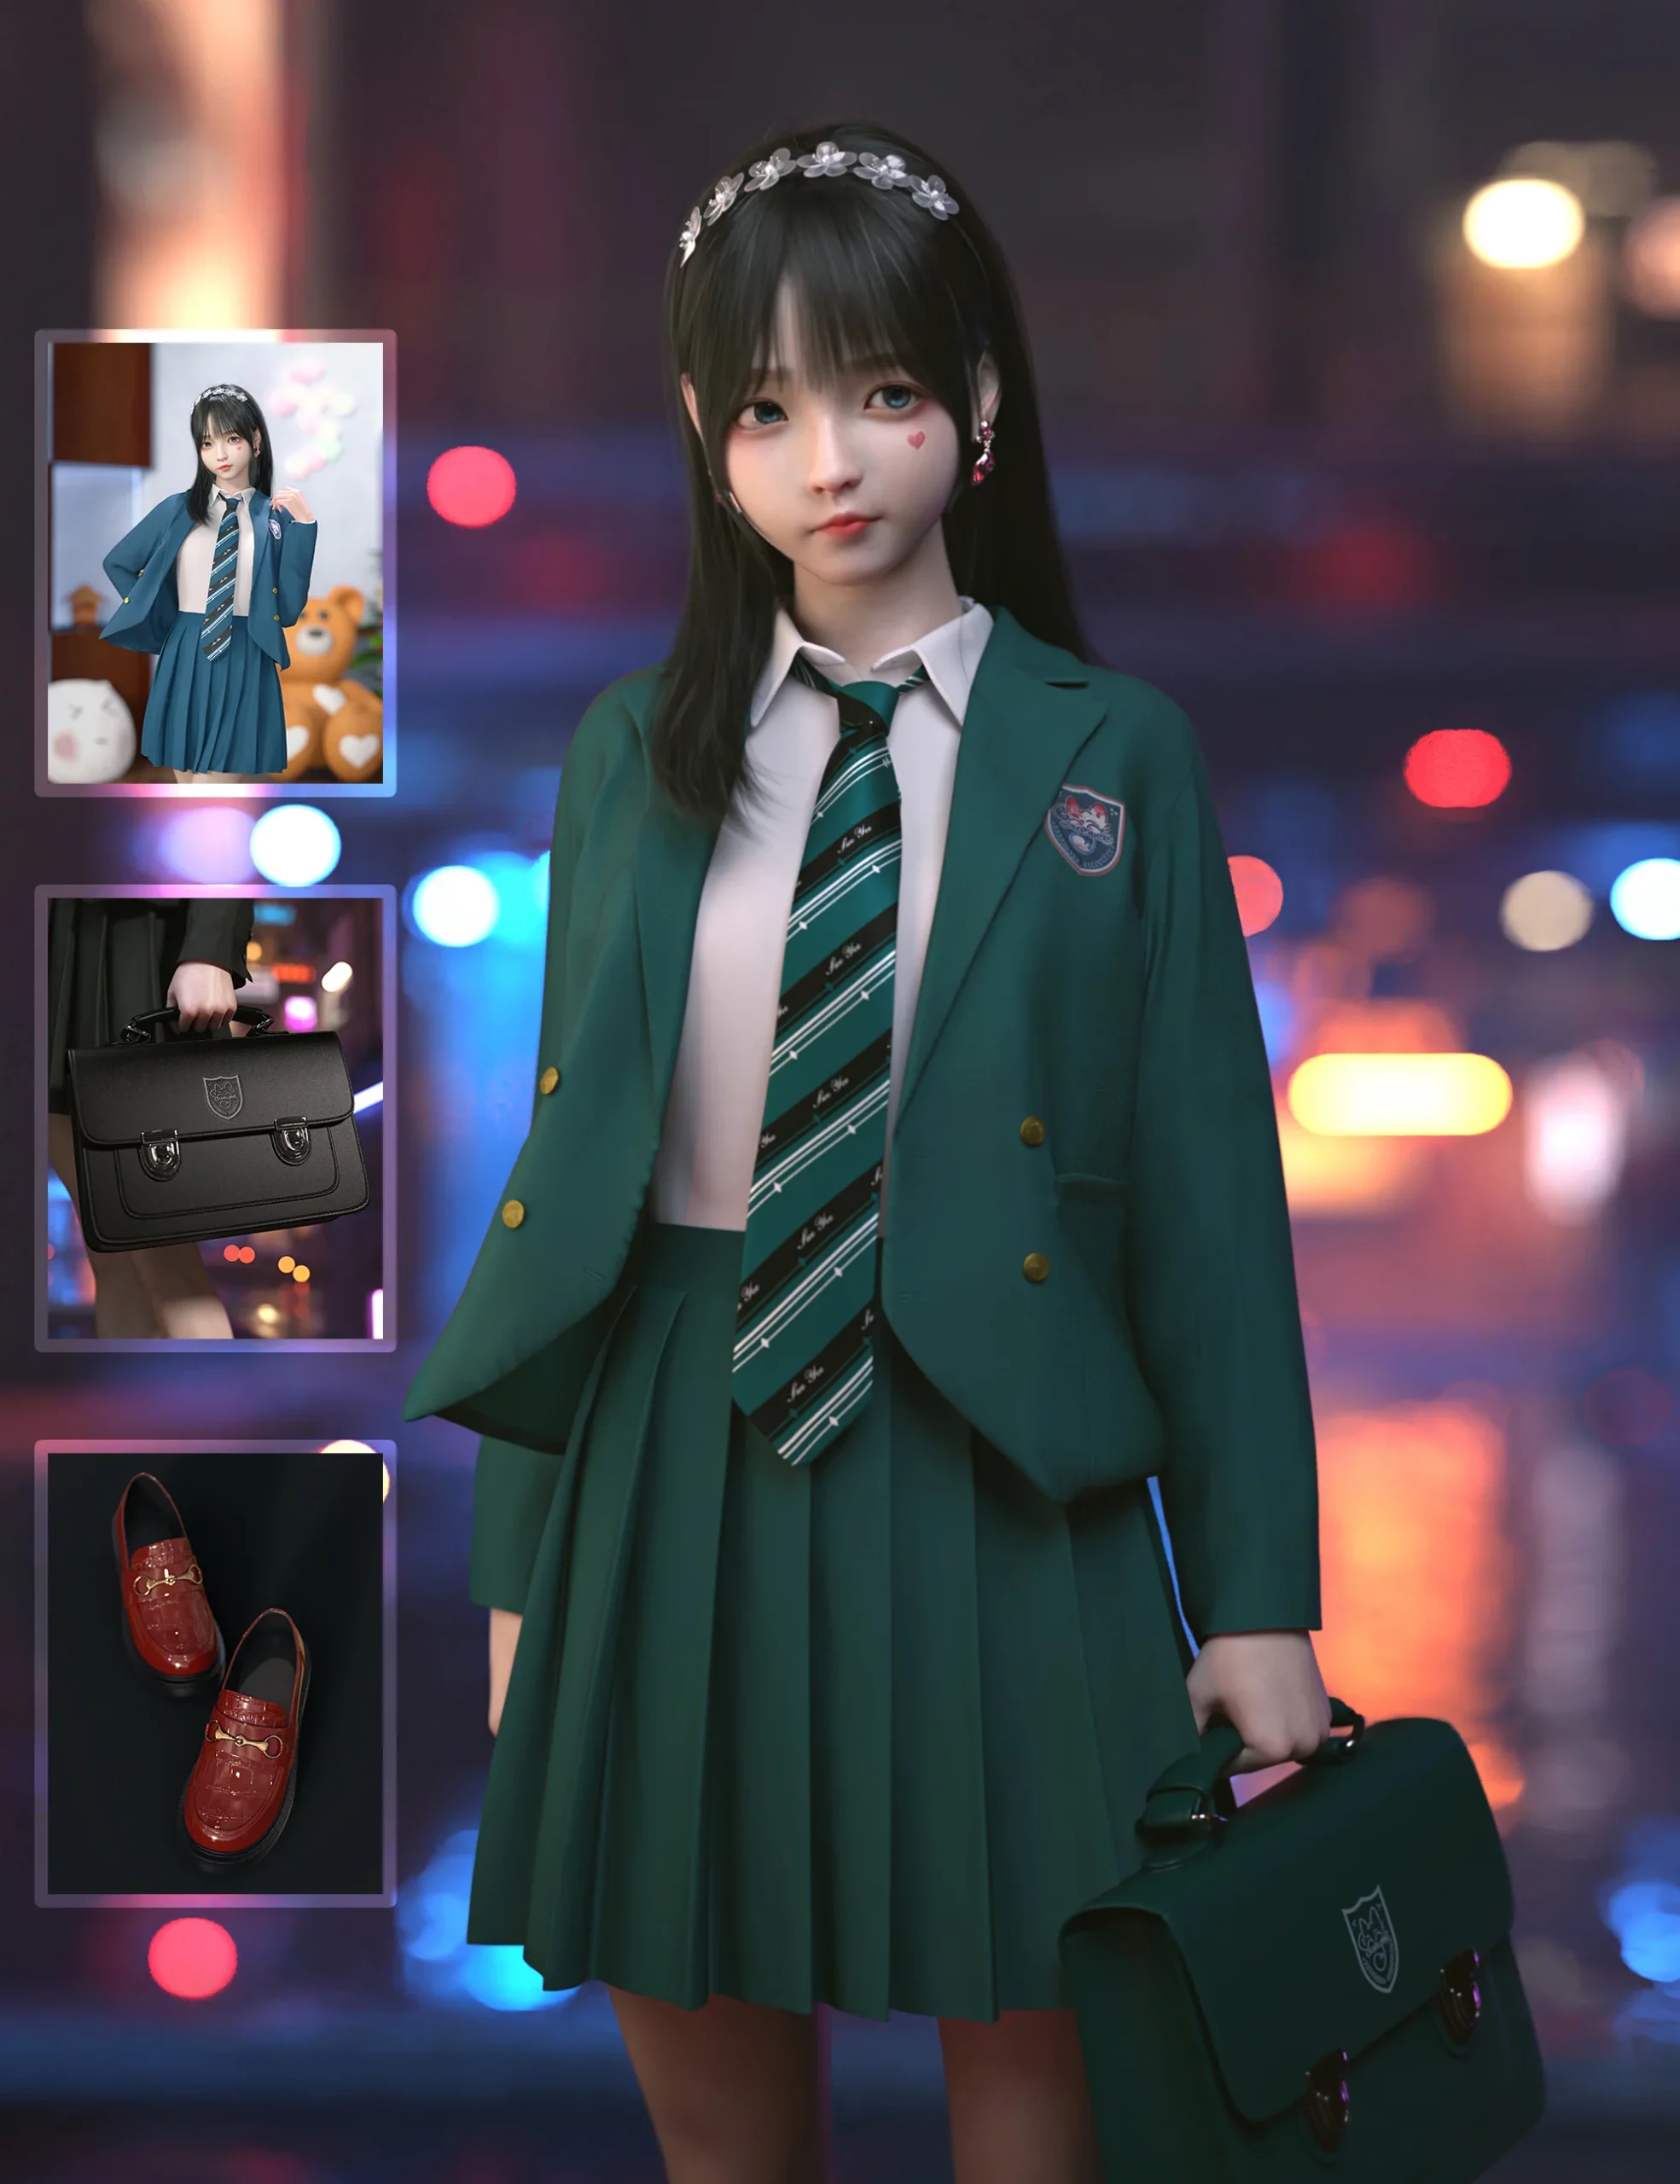 daz3d模型-日本校服套装 dForce SU Japan School Uniform Suit for Genesis 8, 8.1, and 9-后期素材库